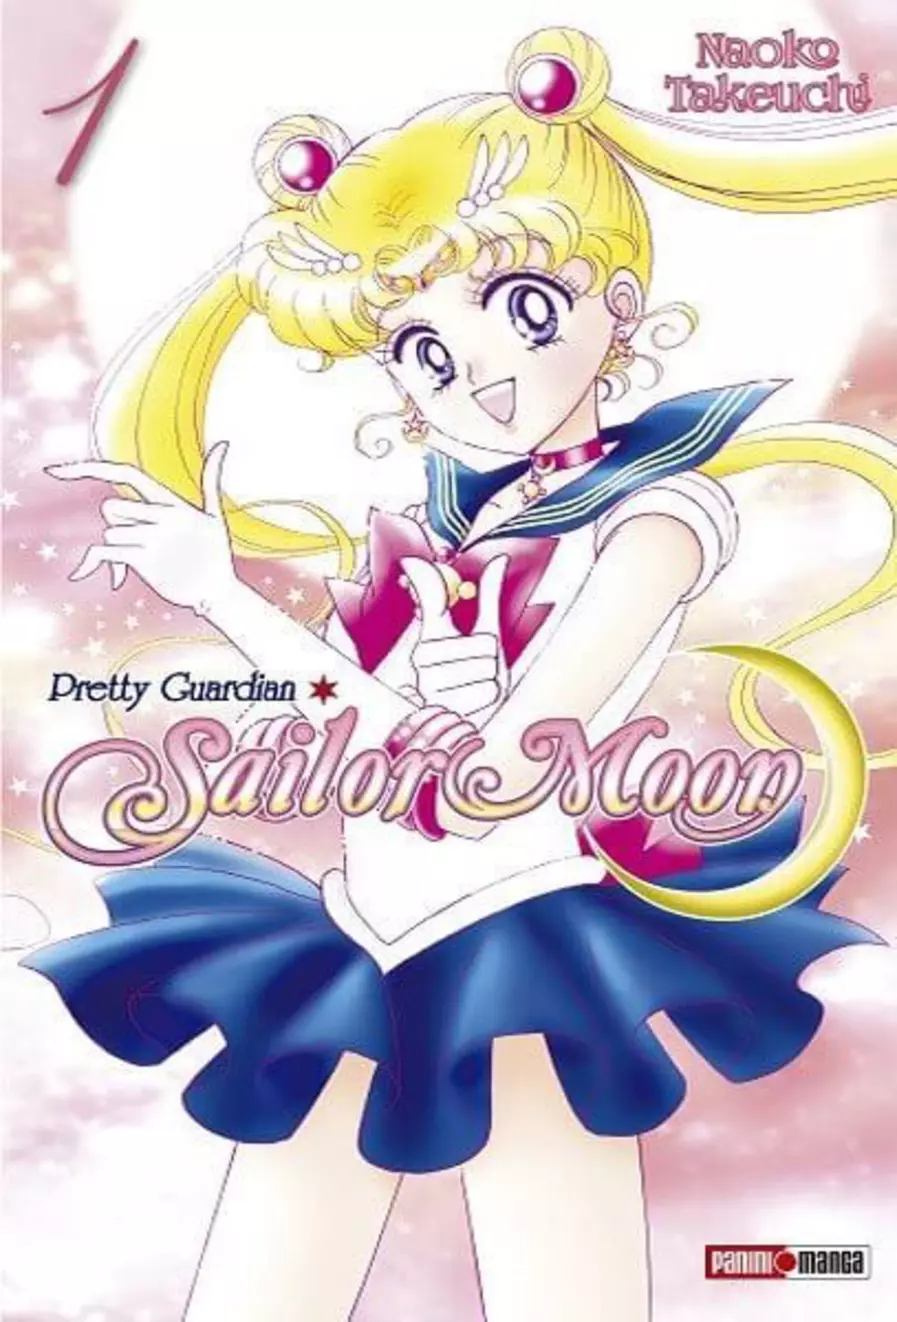 Sailor Moon #1